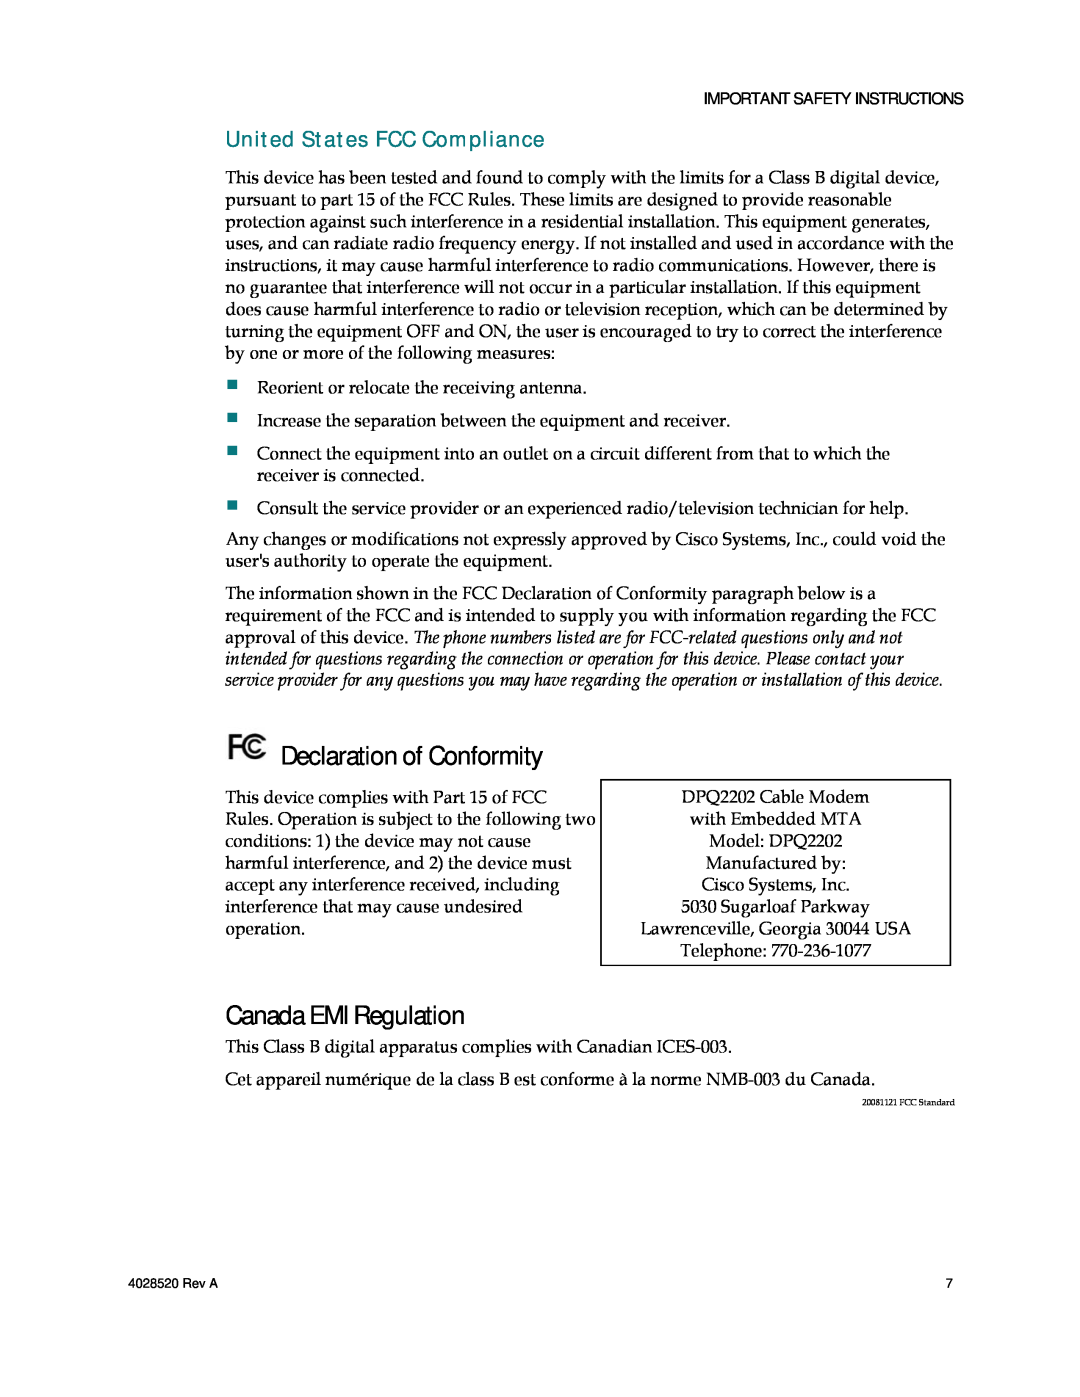 Cisco Systems DPQ2202 Declaration of Conformity, Canada EMI Regulation, United States FCC Compliance 